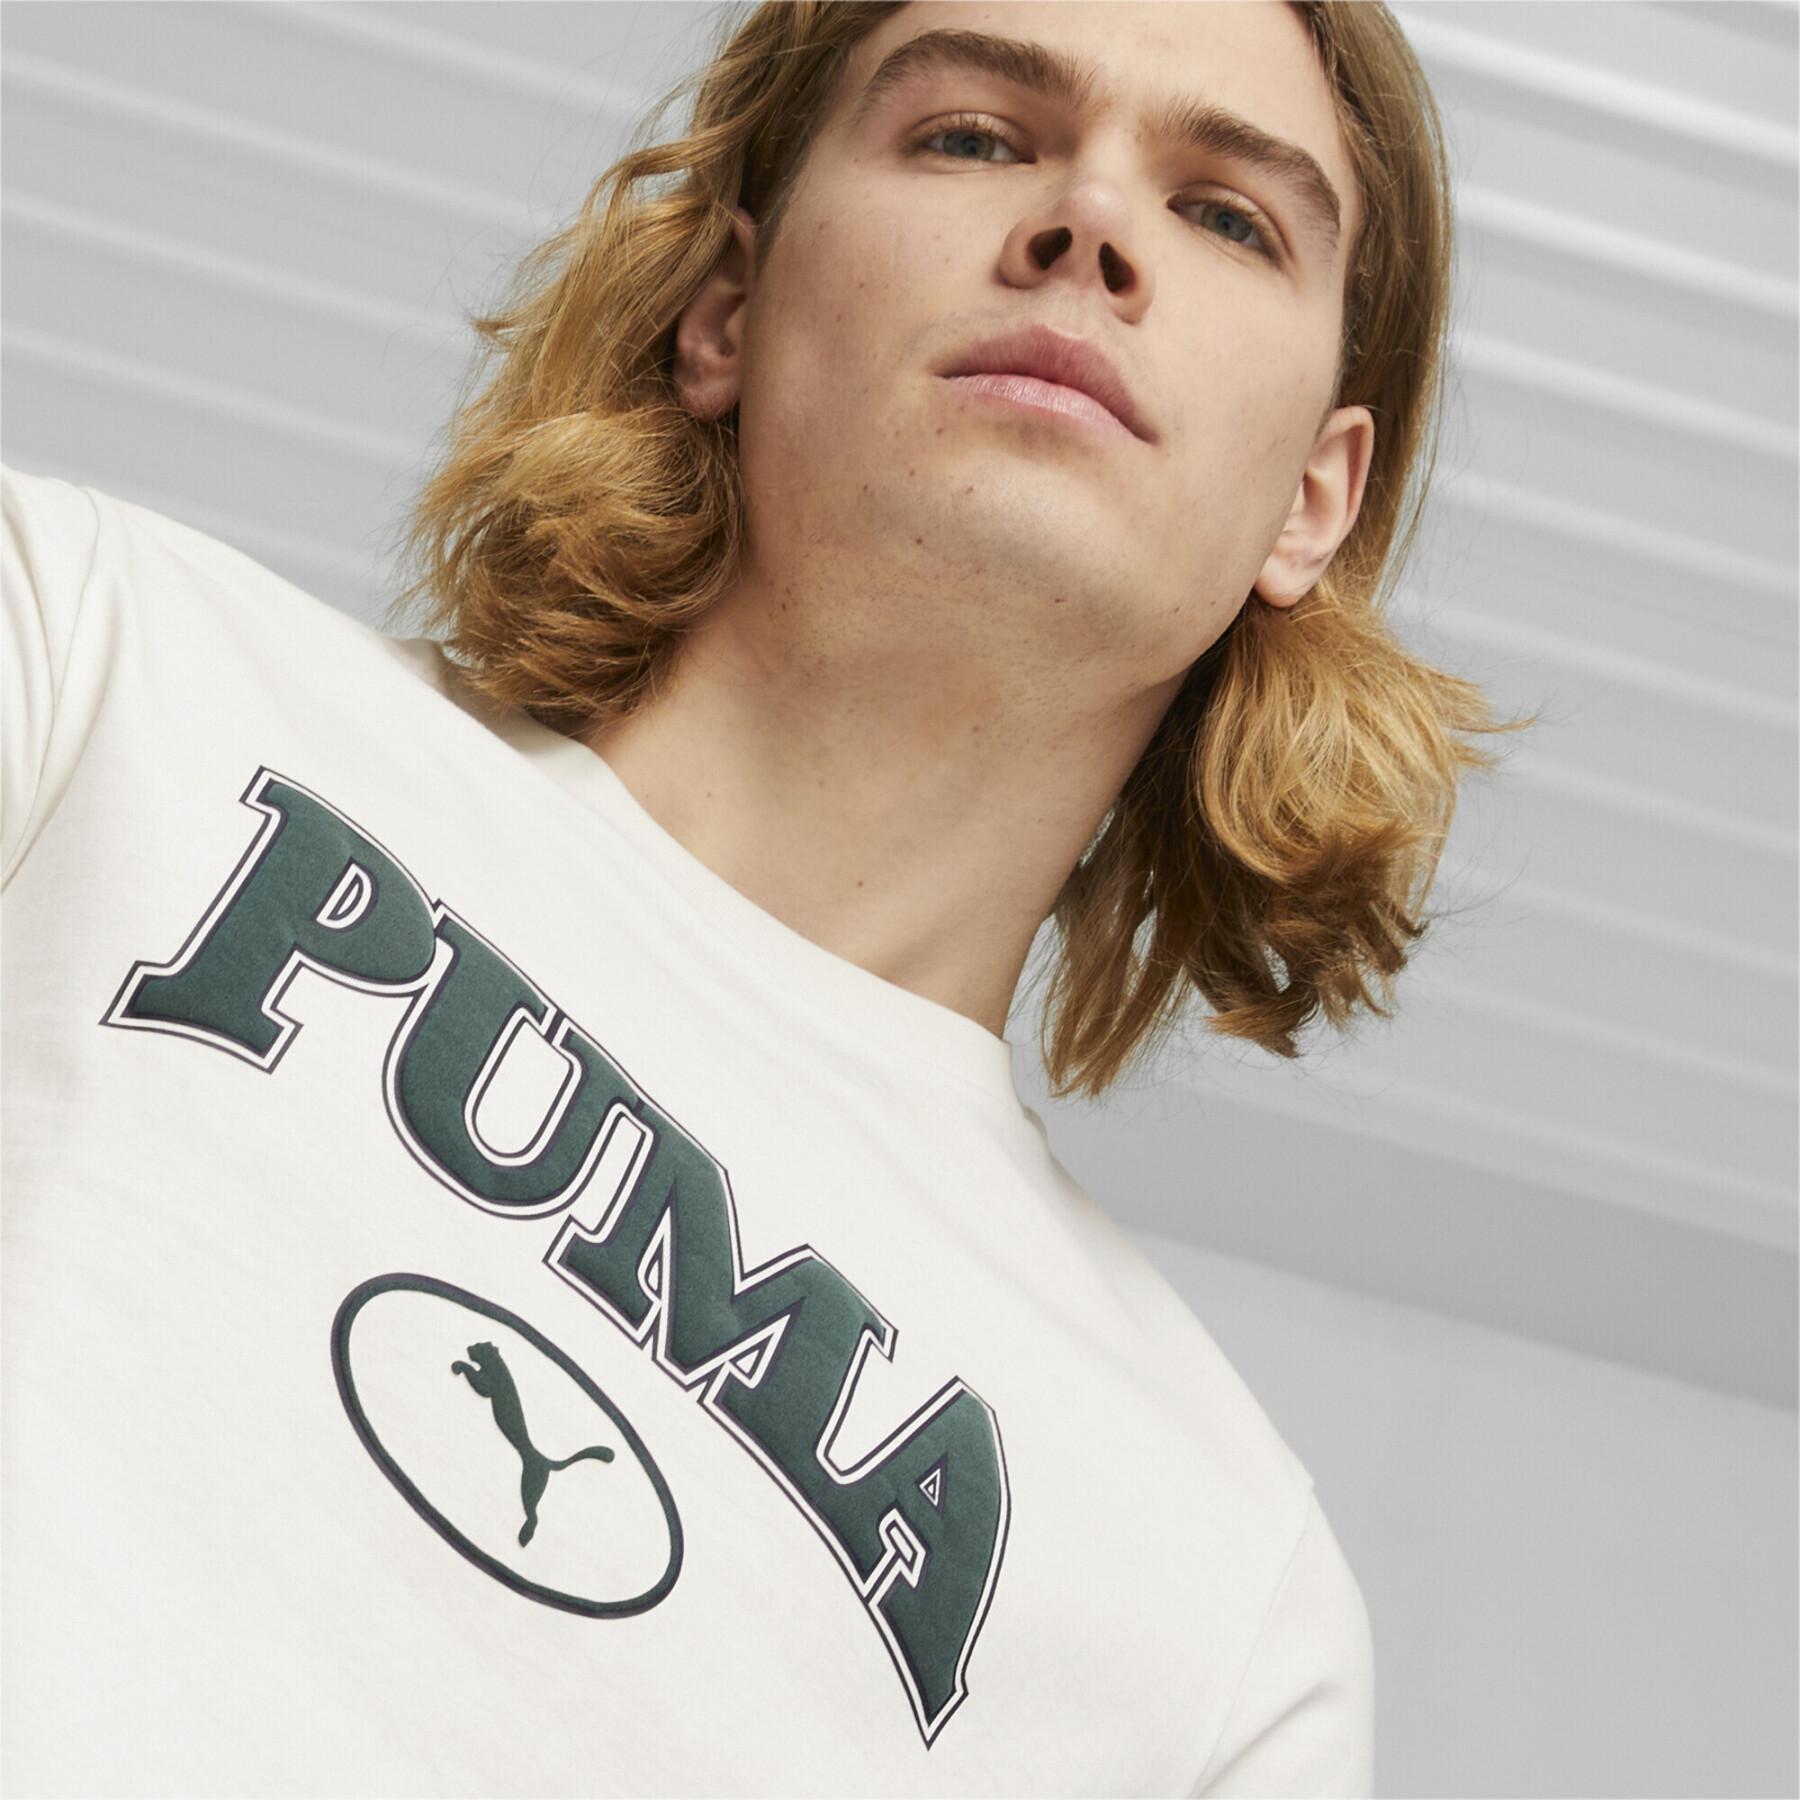 Puma - - Lifestyle Male T-shirts Squad T-shirt - Lifestyle